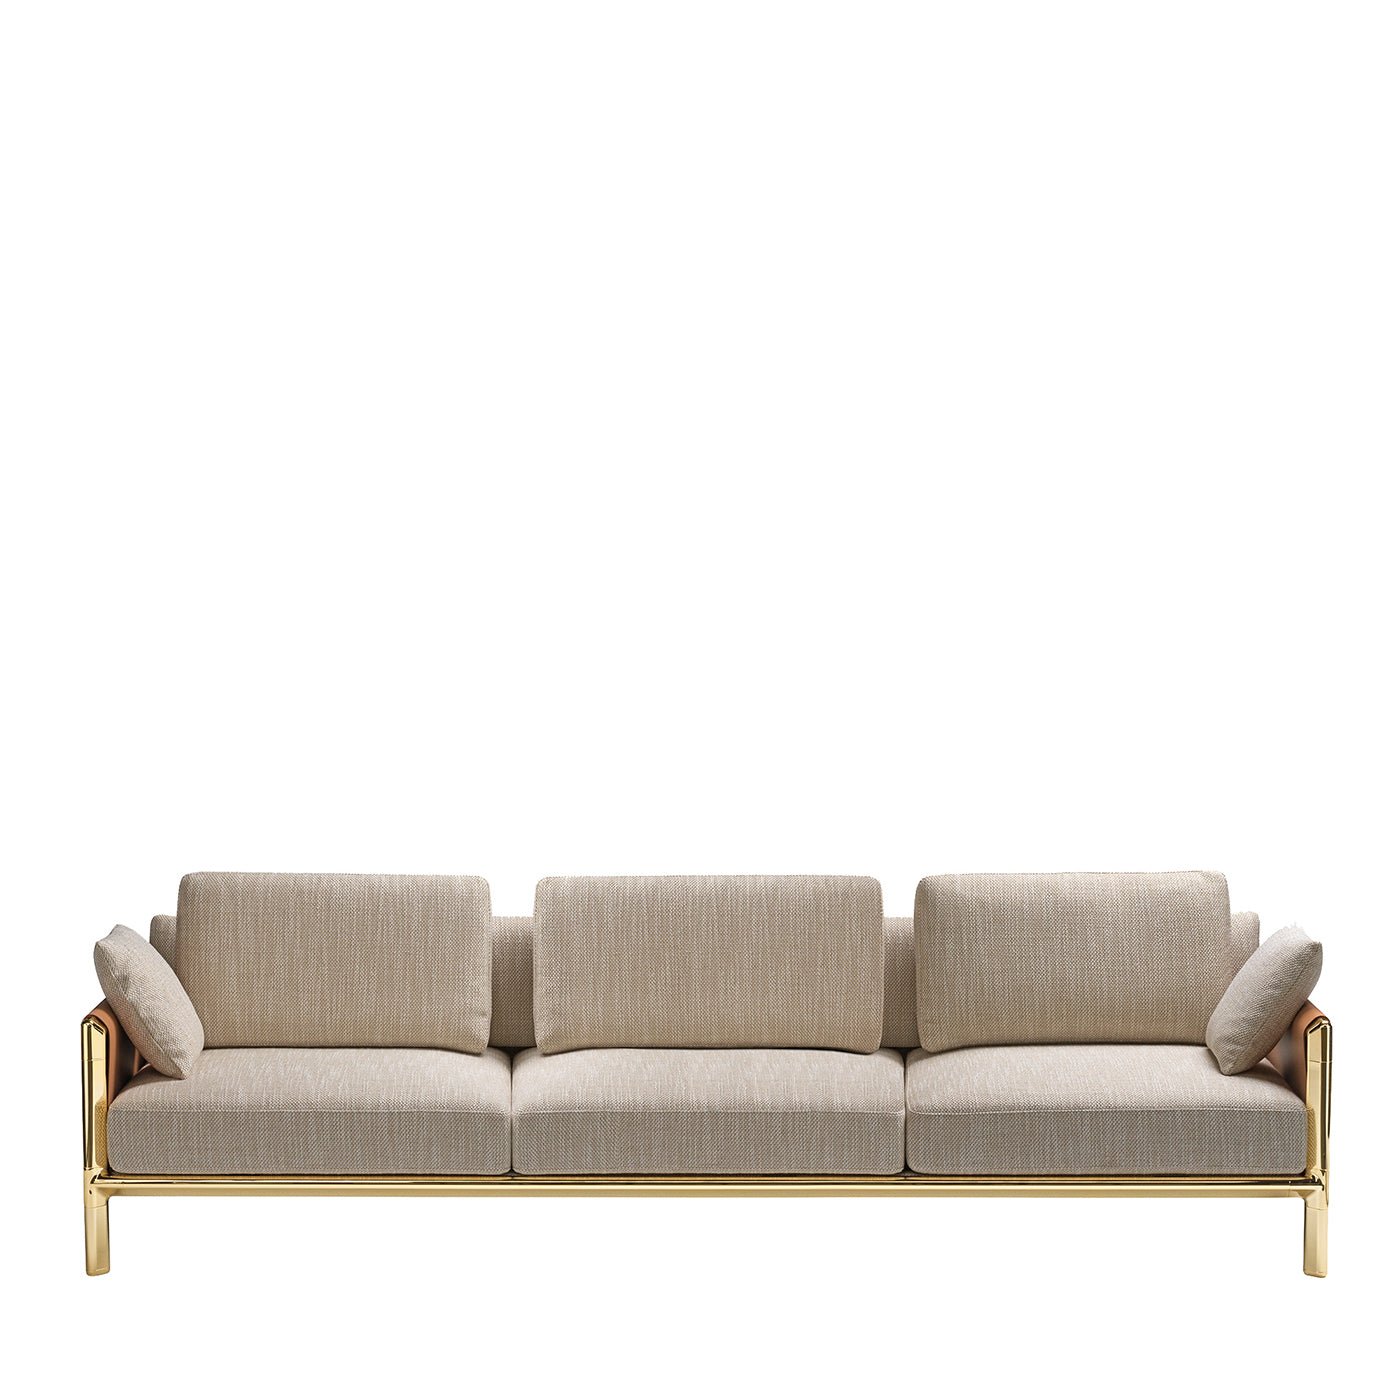 Rahmen gold/grau sofa by Stefano Giovannoni - Hauptansicht